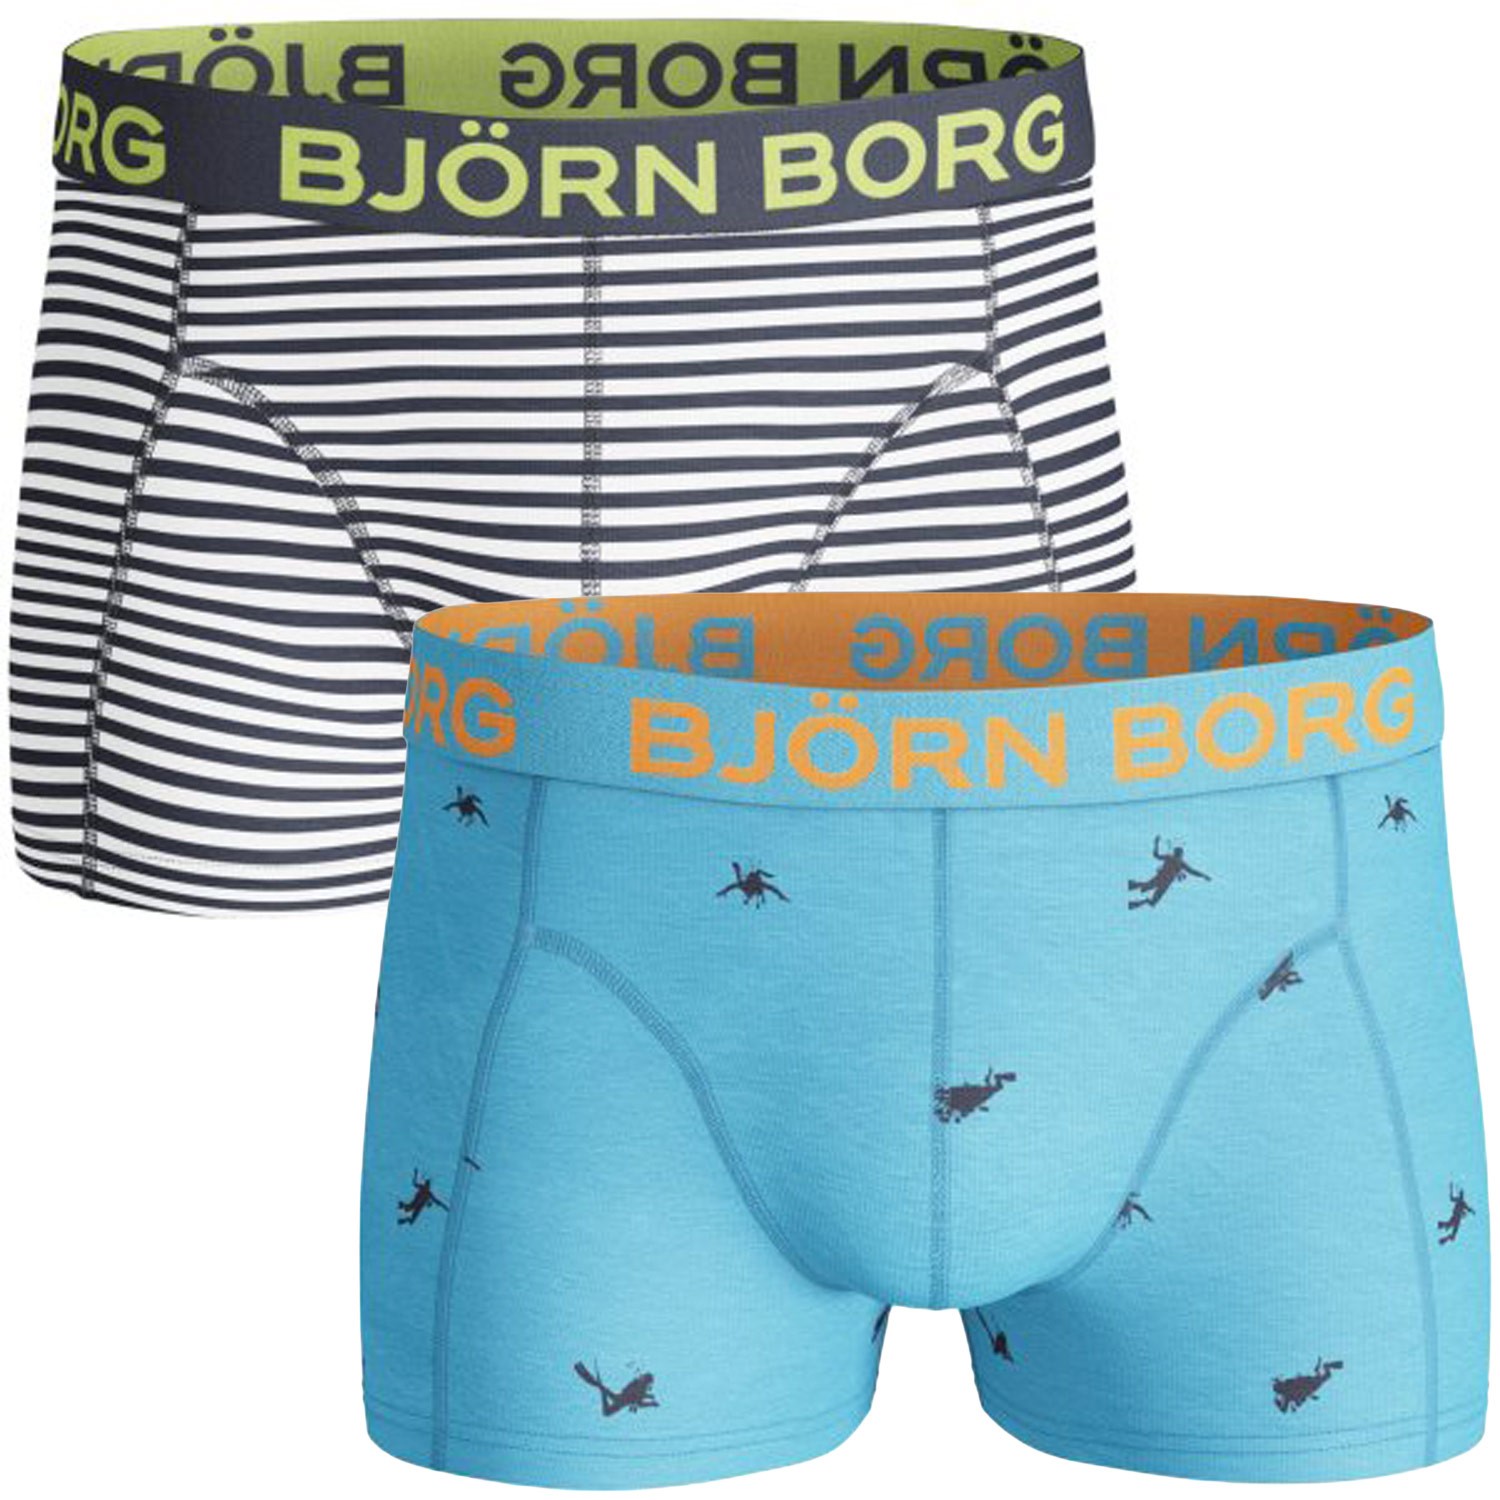 Björn Borg Short Shorts Summer stripes&Scuba Diver